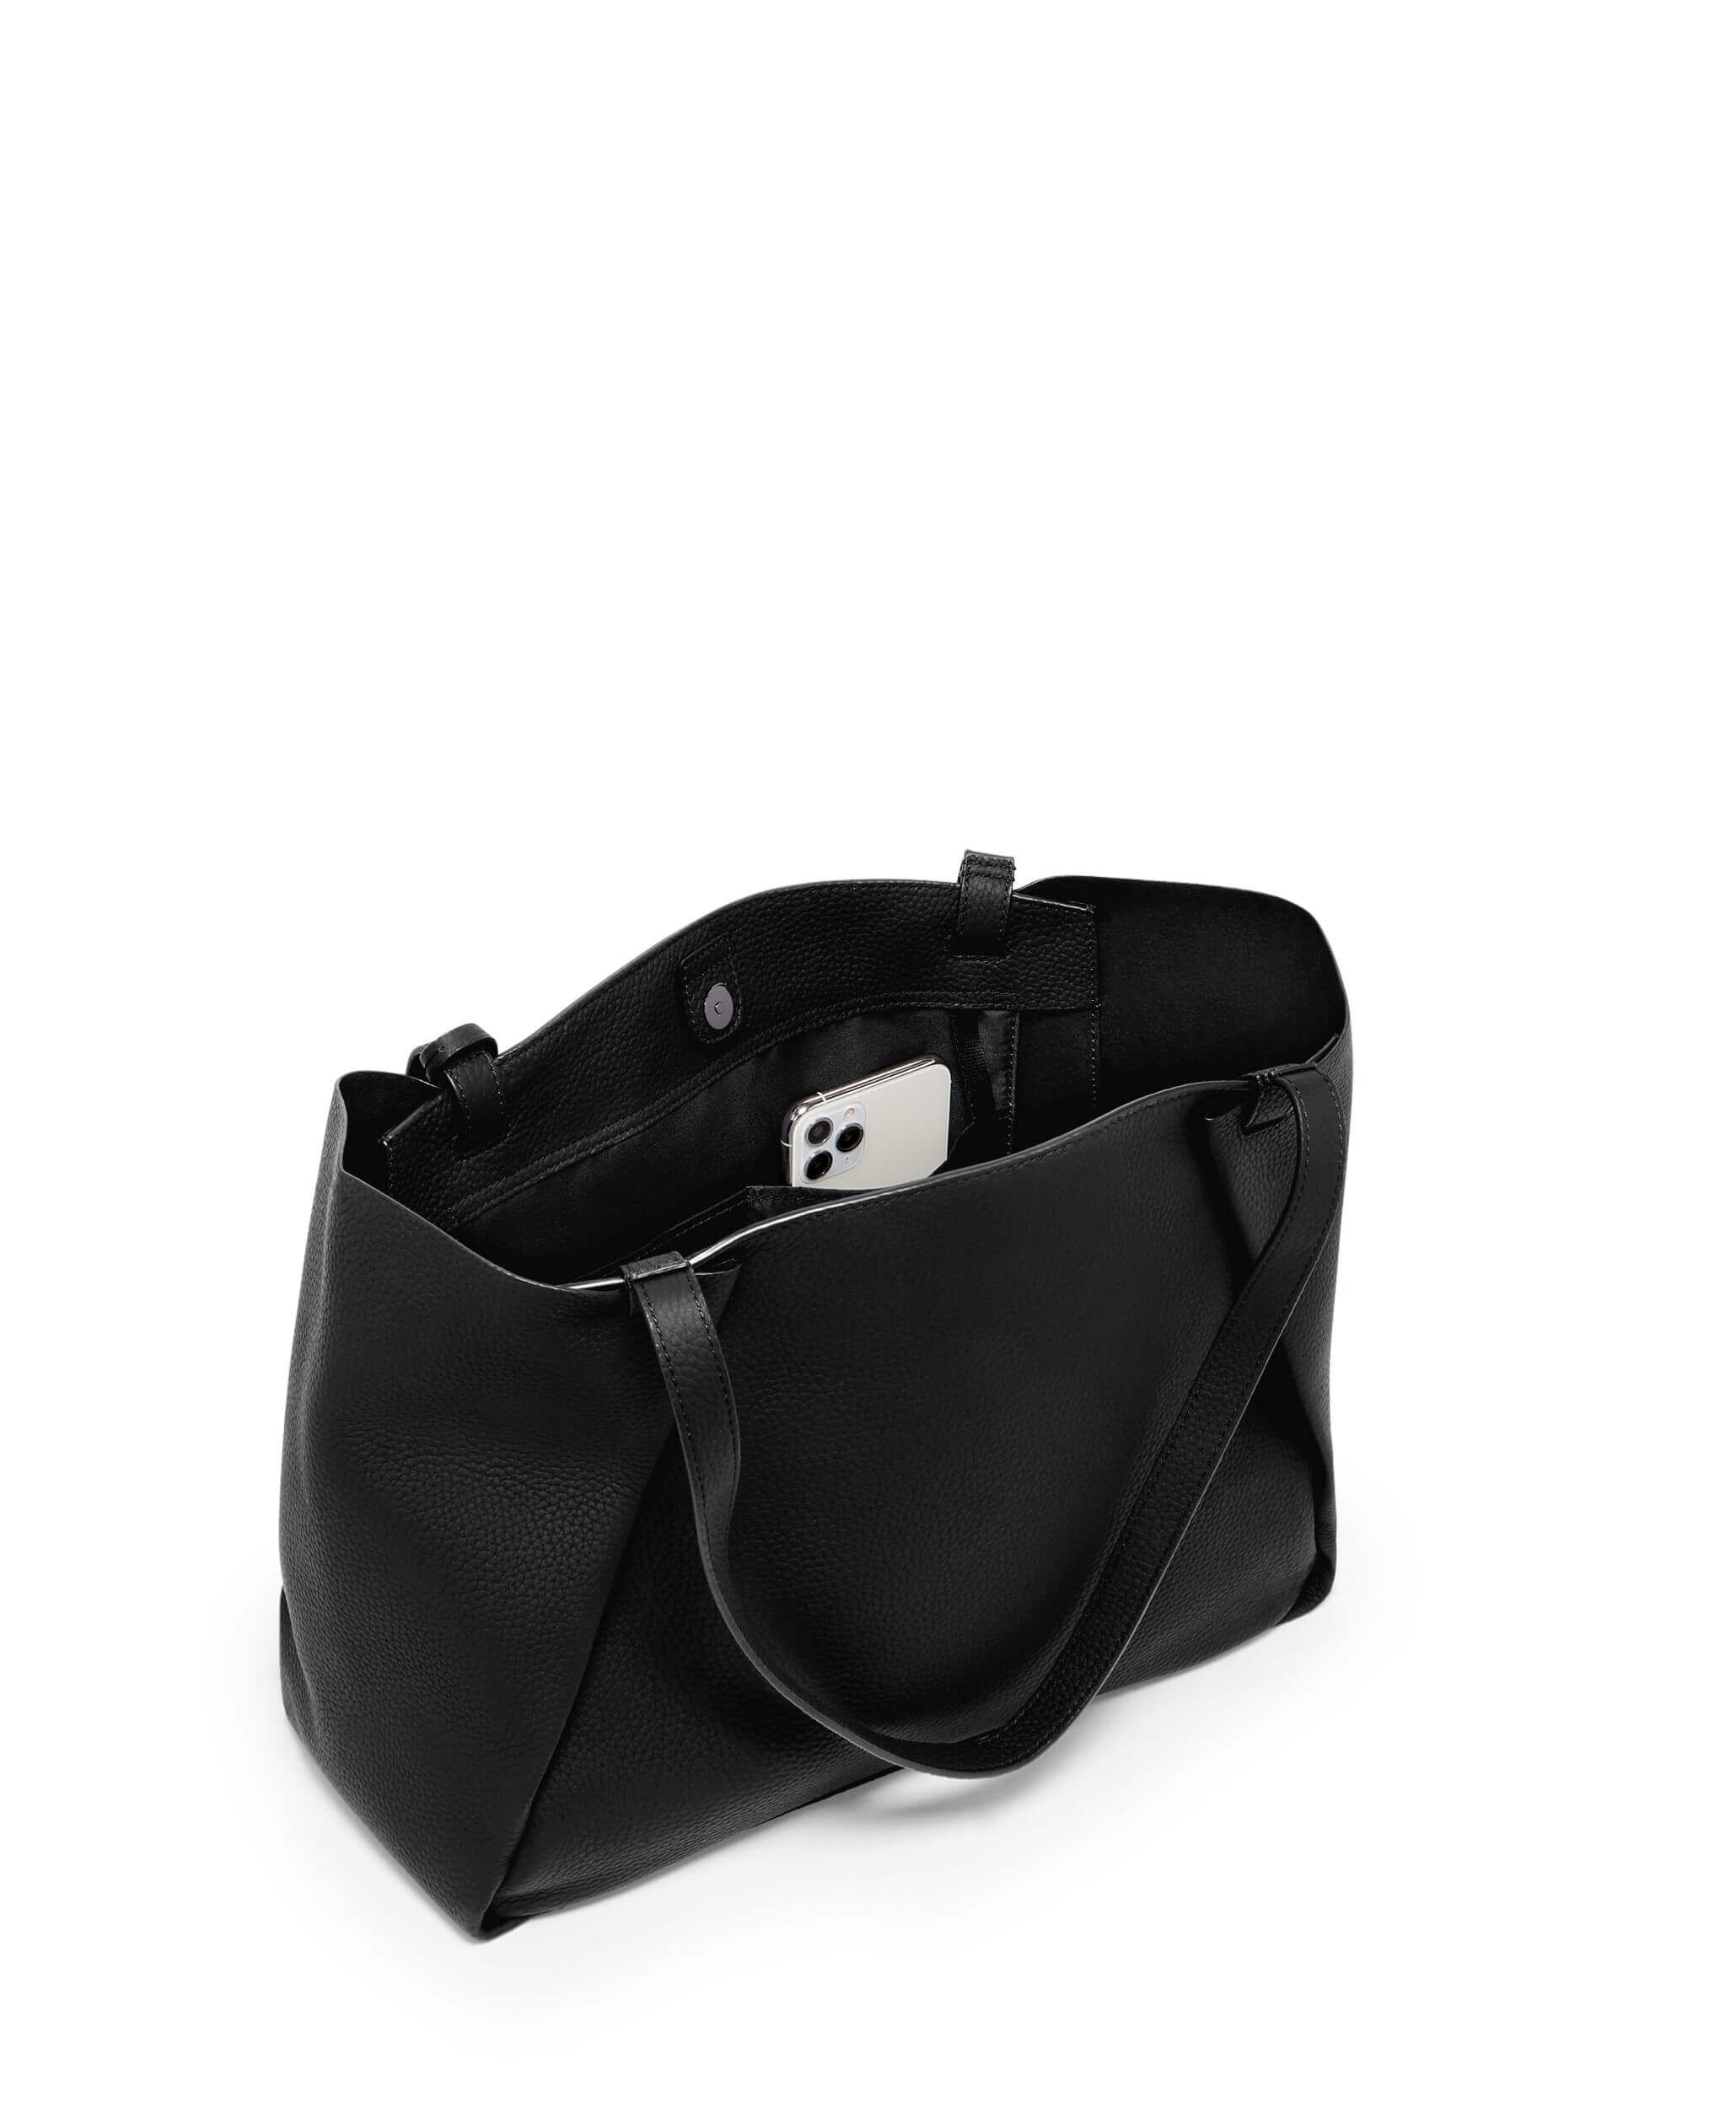 Tumi Tumi Large Leather Laptop Bag - Black Shoulder Bags, Handbags -  TMI53273 | The RealReal